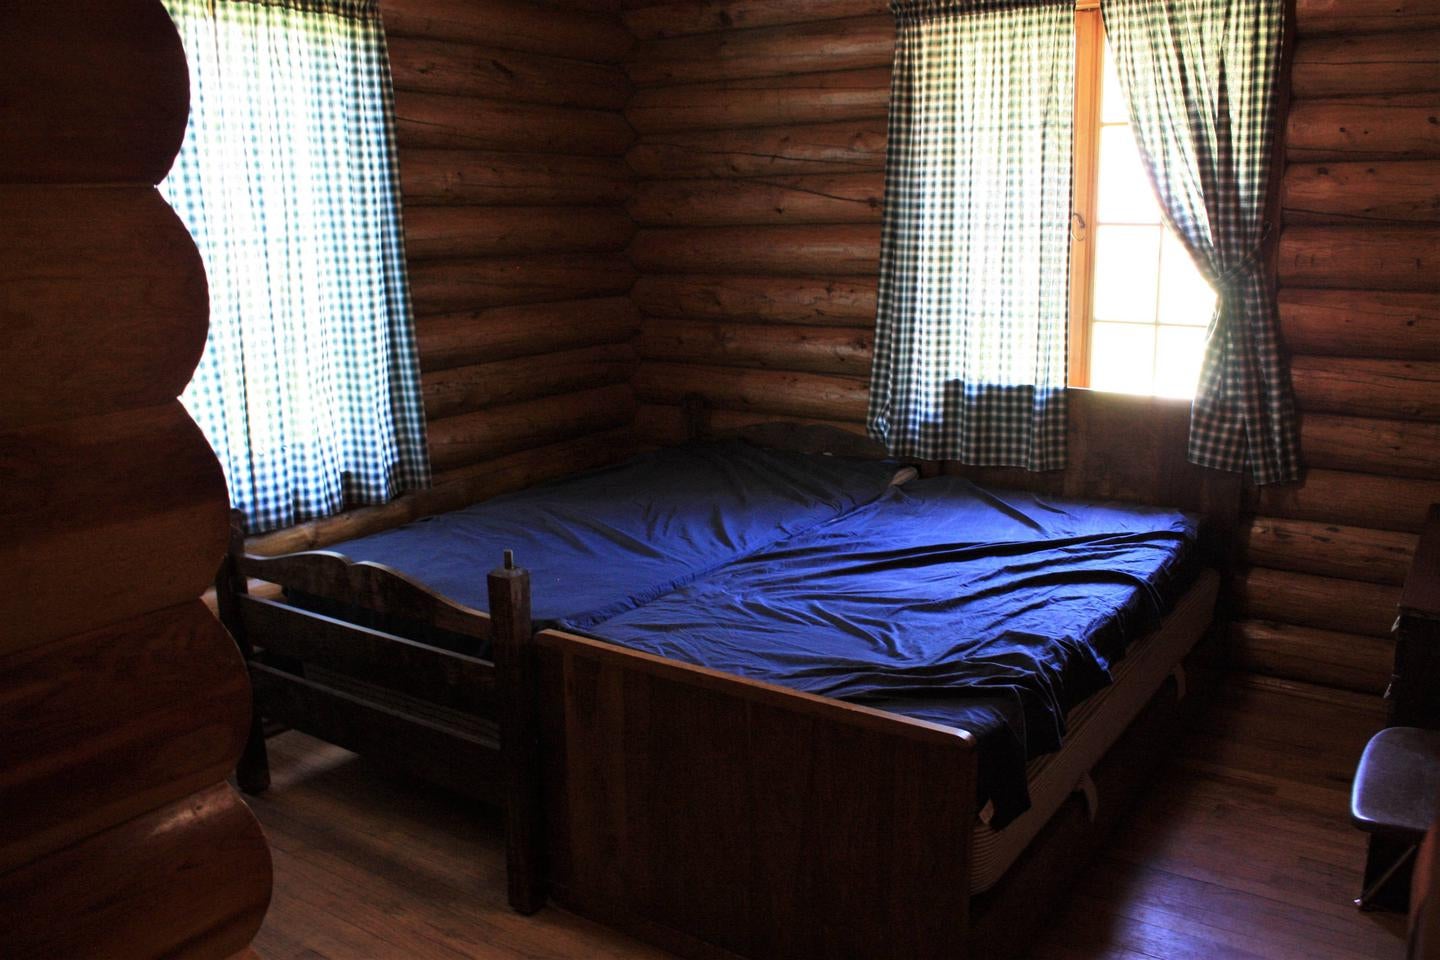 Keystone Ranger Station bedroom2



Keystone Ranger Station bedroom 2

Credit: Alyssa Wesner - USDA Forest Service